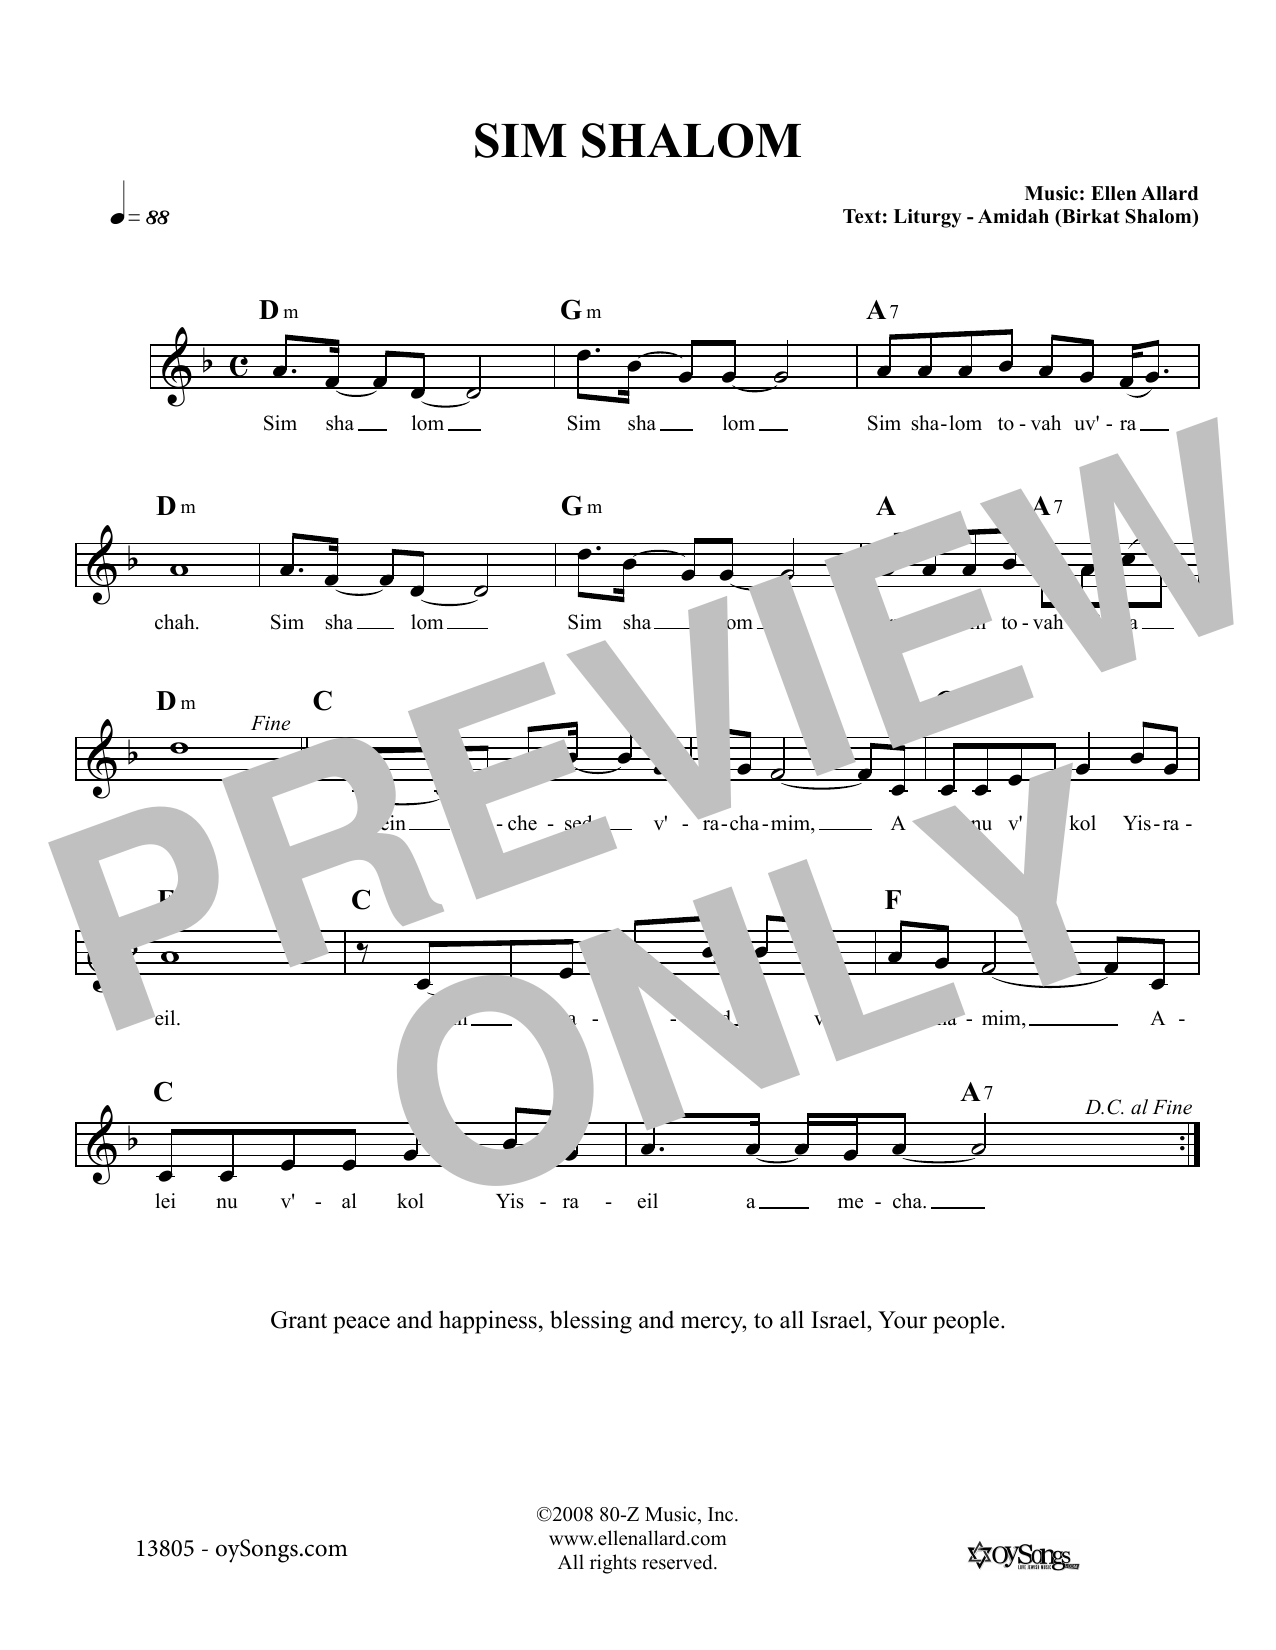 Download Ellen Allard Sim Shalom Sheet Music and learn how to play Melody Line, Lyrics & Chords PDF digital score in minutes